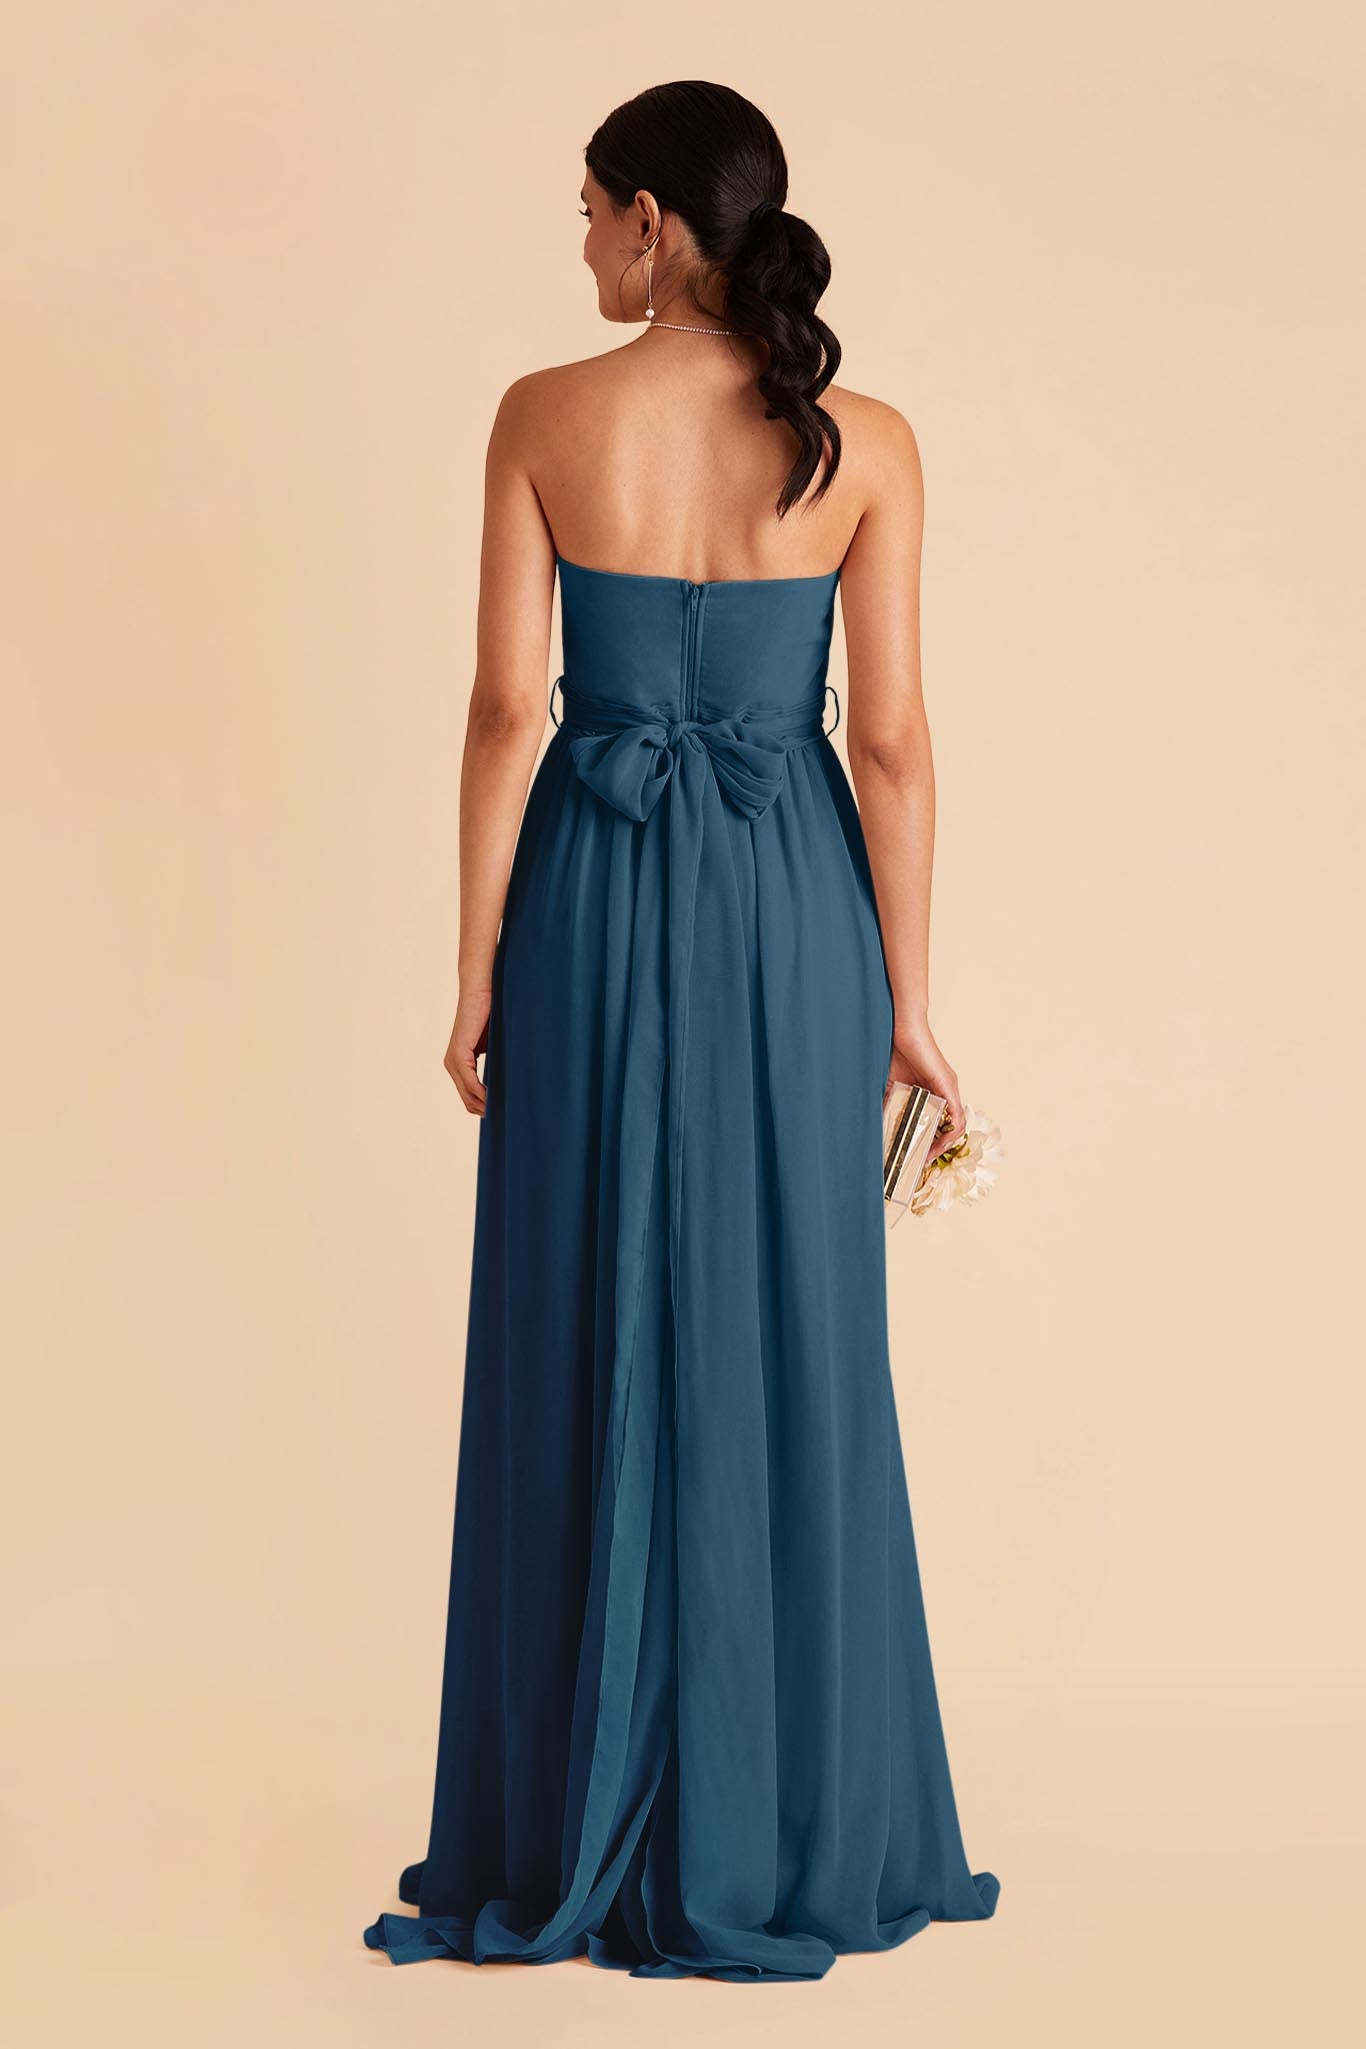 Ocean Blue Grace Convertible Dress by Birdy Grey